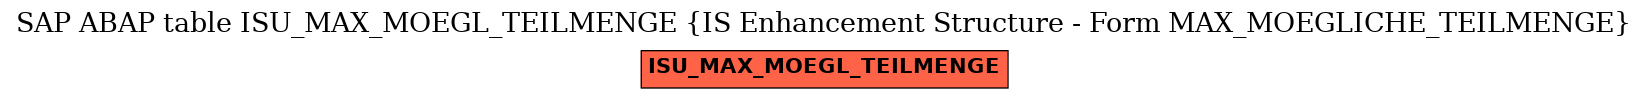 E-R Diagram for table ISU_MAX_MOEGL_TEILMENGE (IS Enhancement Structure - Form MAX_MOEGLICHE_TEILMENGE)